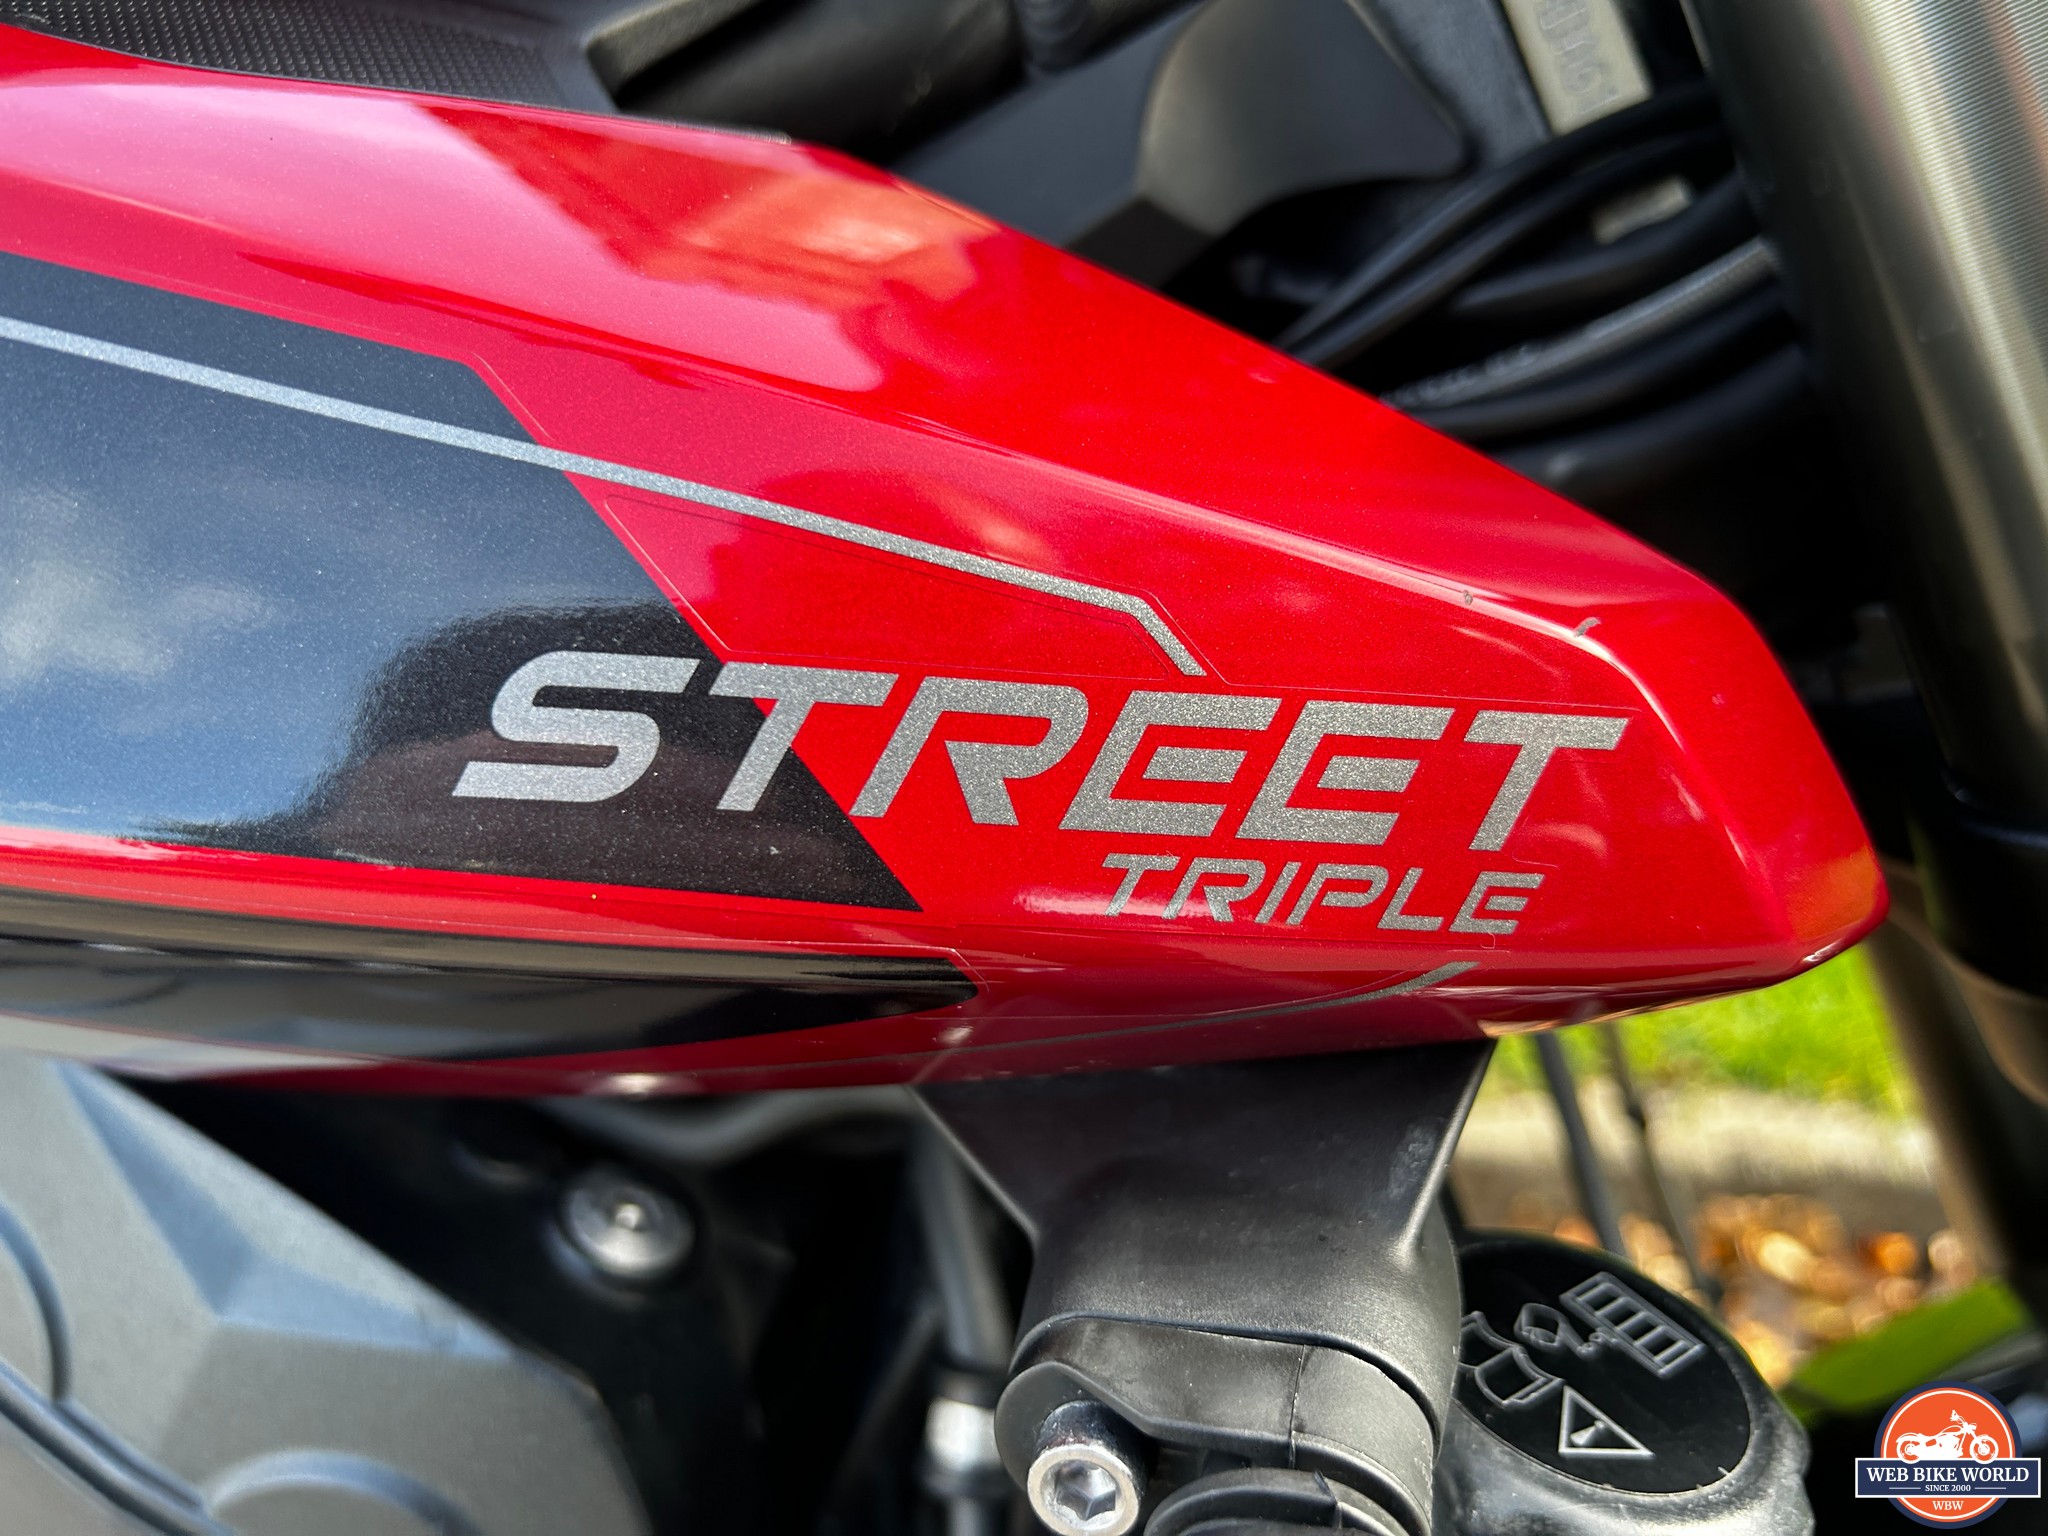 Closeup of the Street Triple logo on the bike